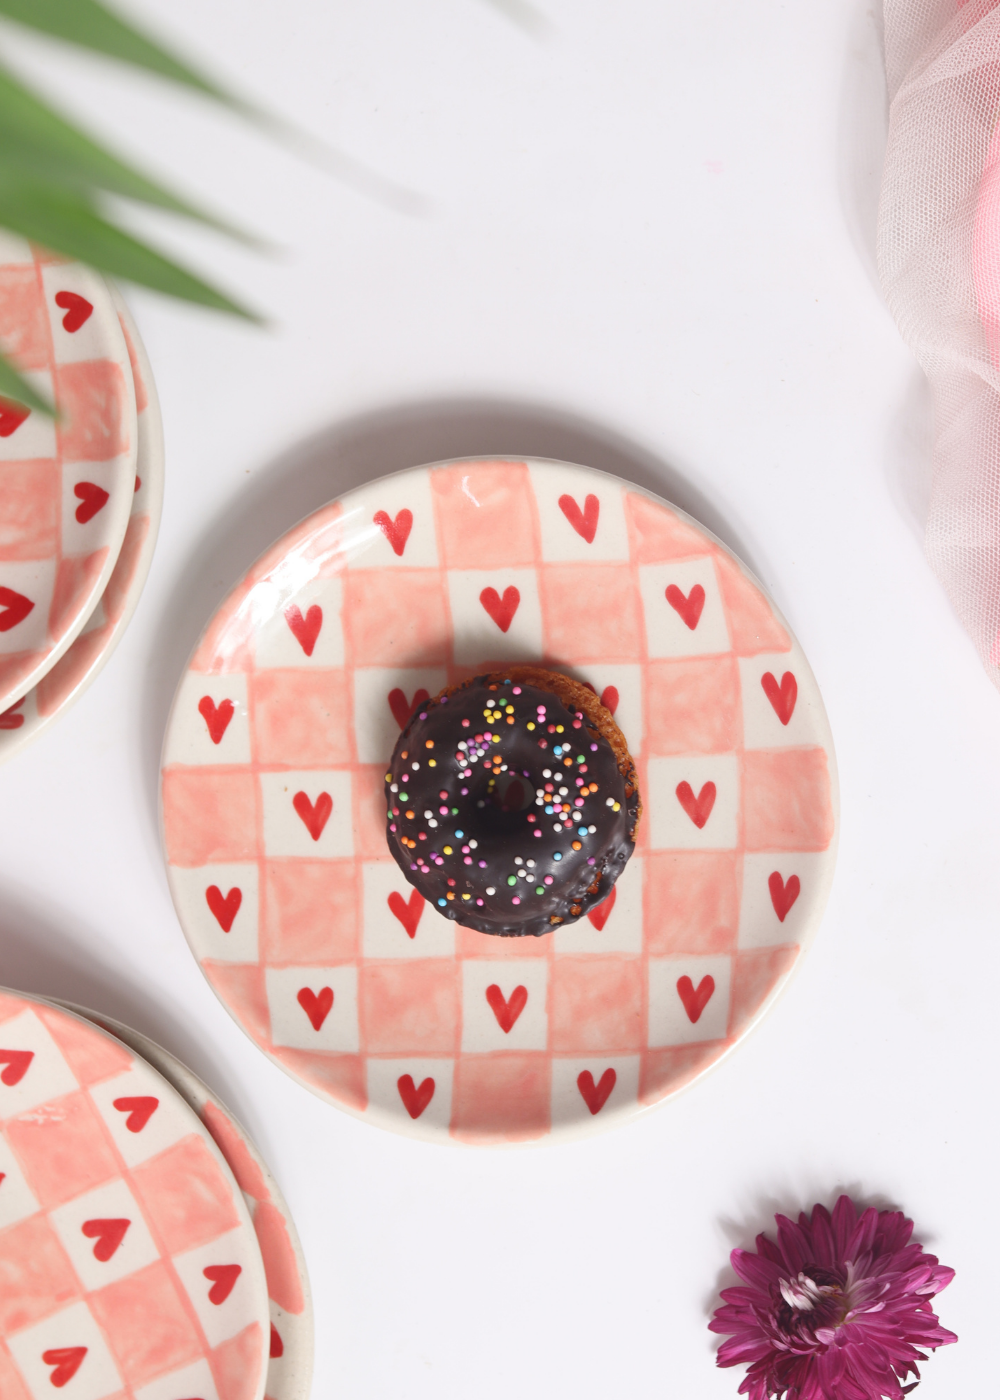 Chequered heart dessert plates with dessert